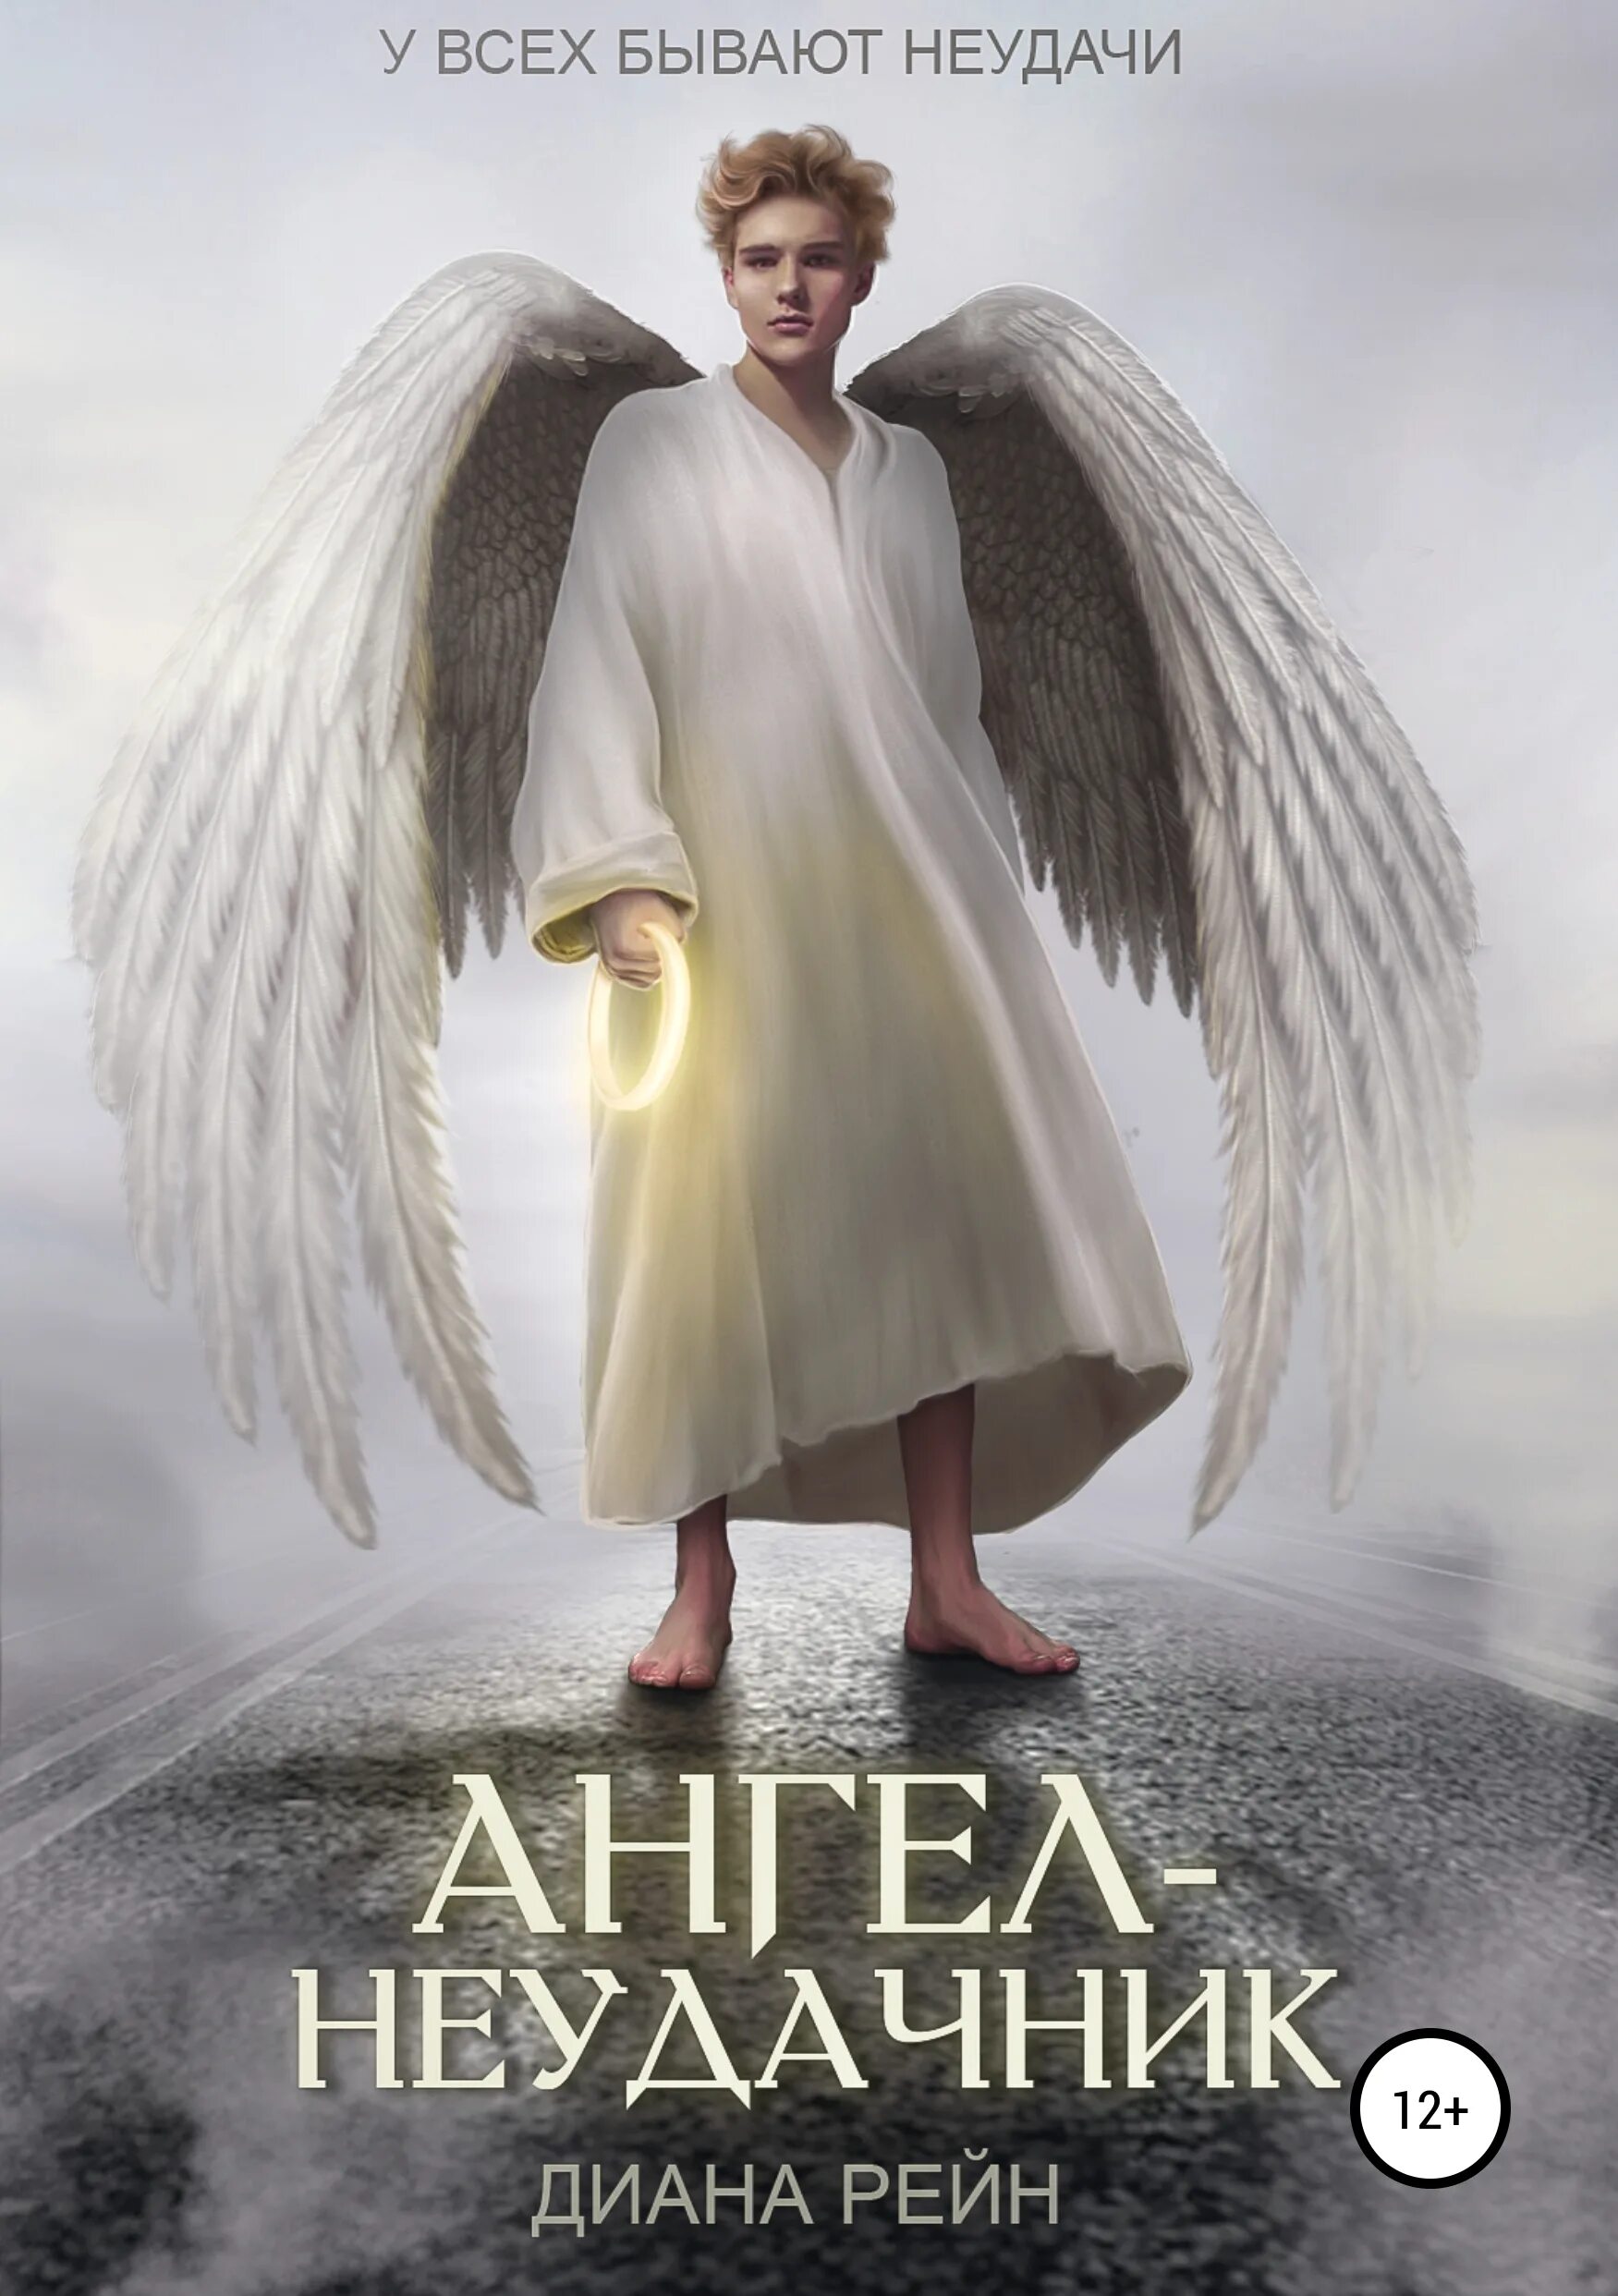 Автор книги ангел. Книга ангелов. Ангел с книгой. Ангел неудачник обложка книги. Книга про ангела.